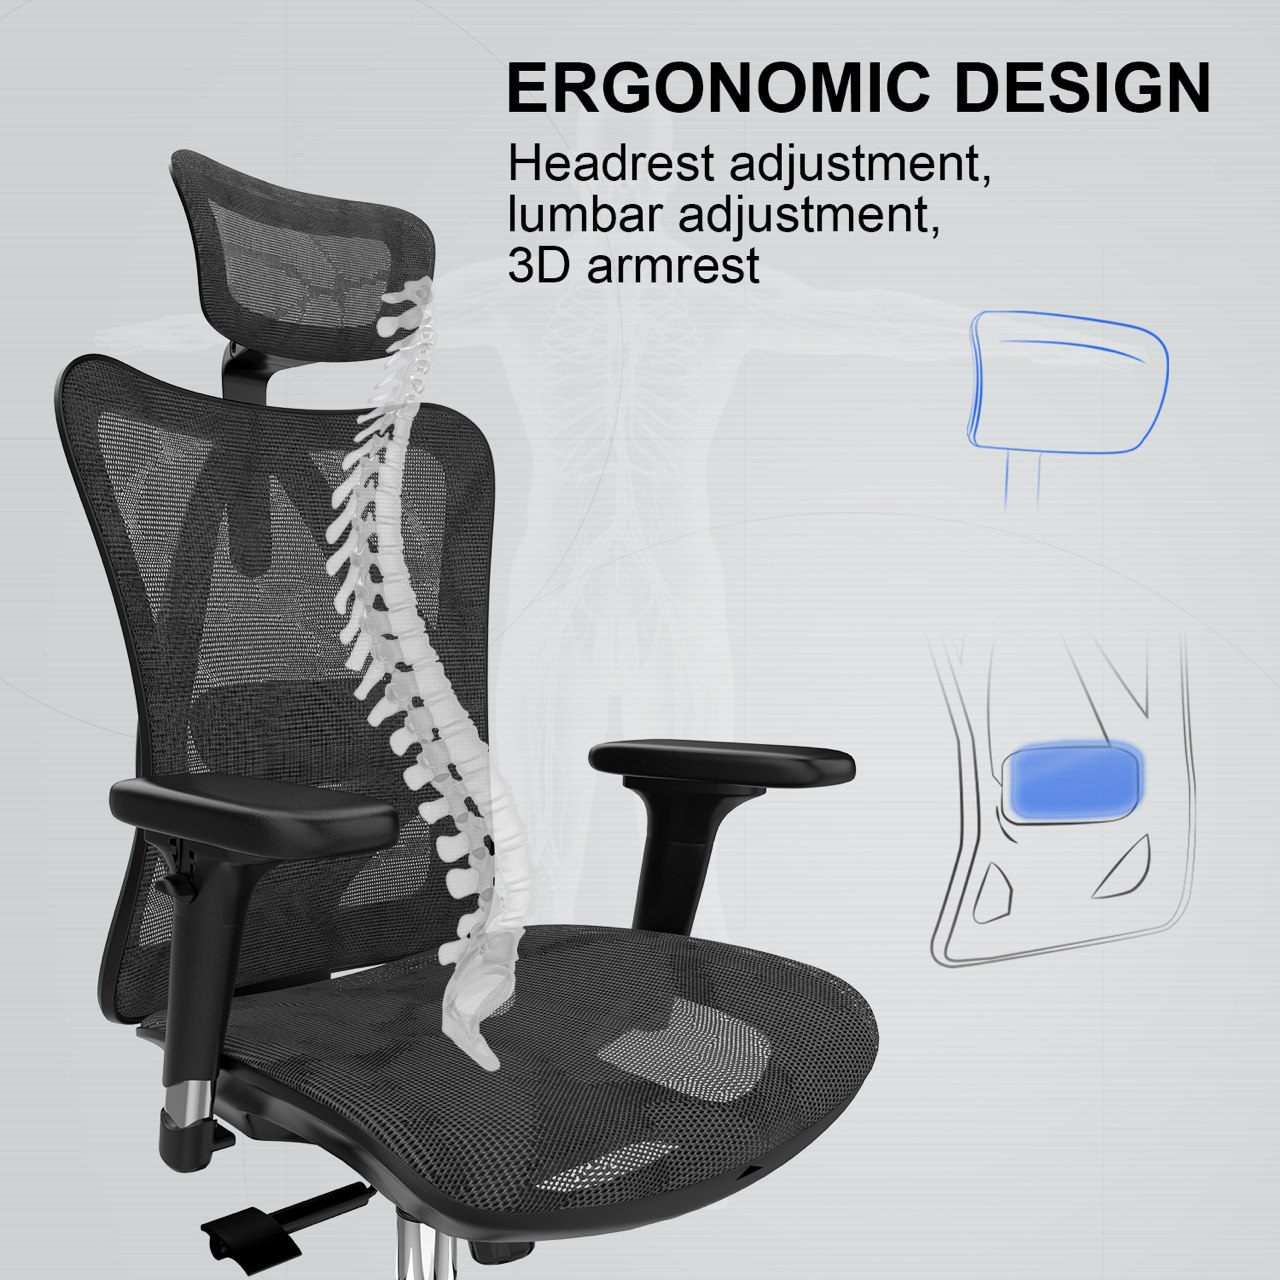 https://www.yankodesign.com/images/design_news/2022/12/ergonomic_office_chair_designed_to_make_WFH_more_healthy_05.jpg